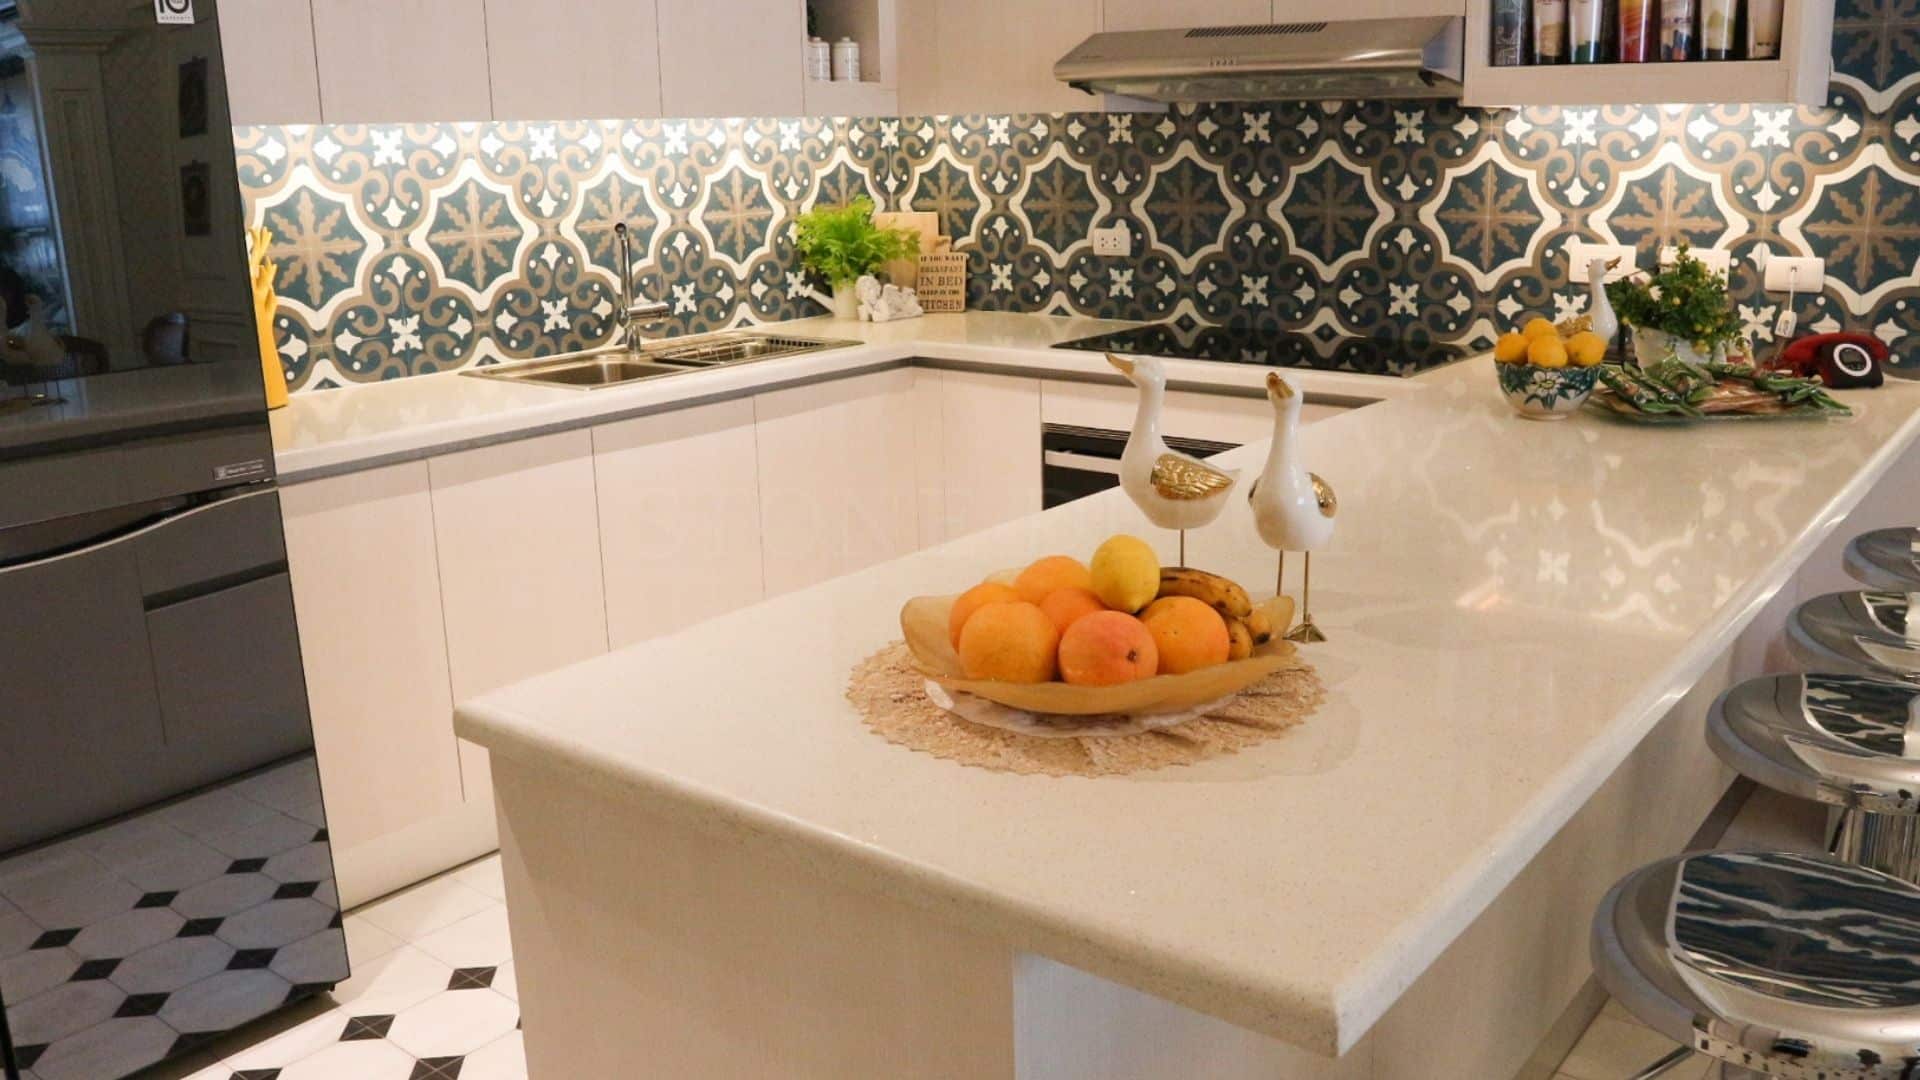 Luxury Quartz Kitchen Countertop Design Inside A Luxury Home